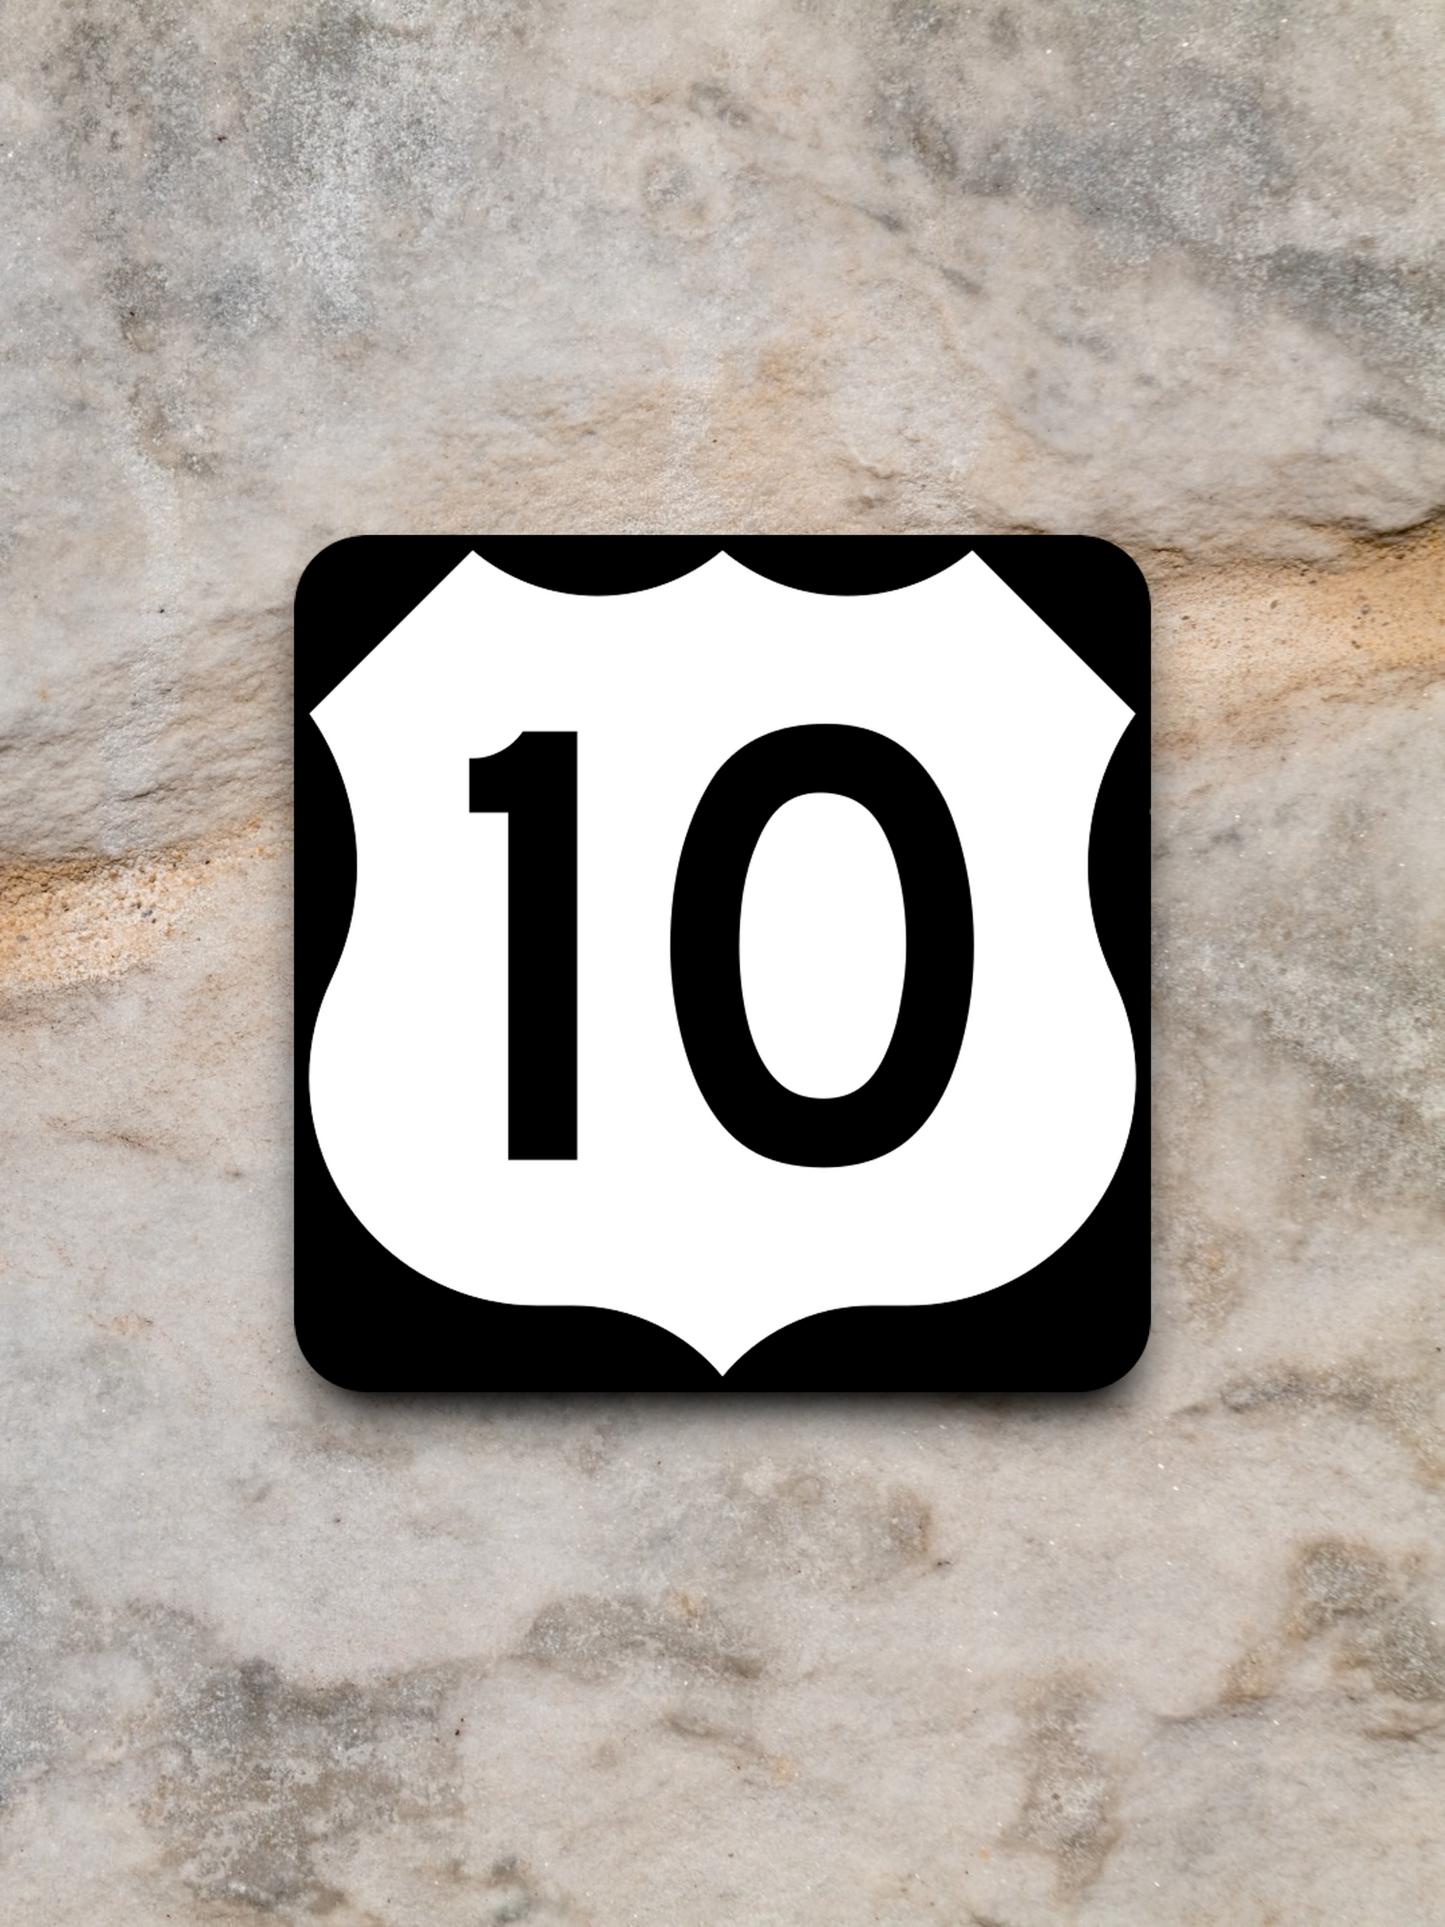 U.S. Route 10 Road Sign Sticker